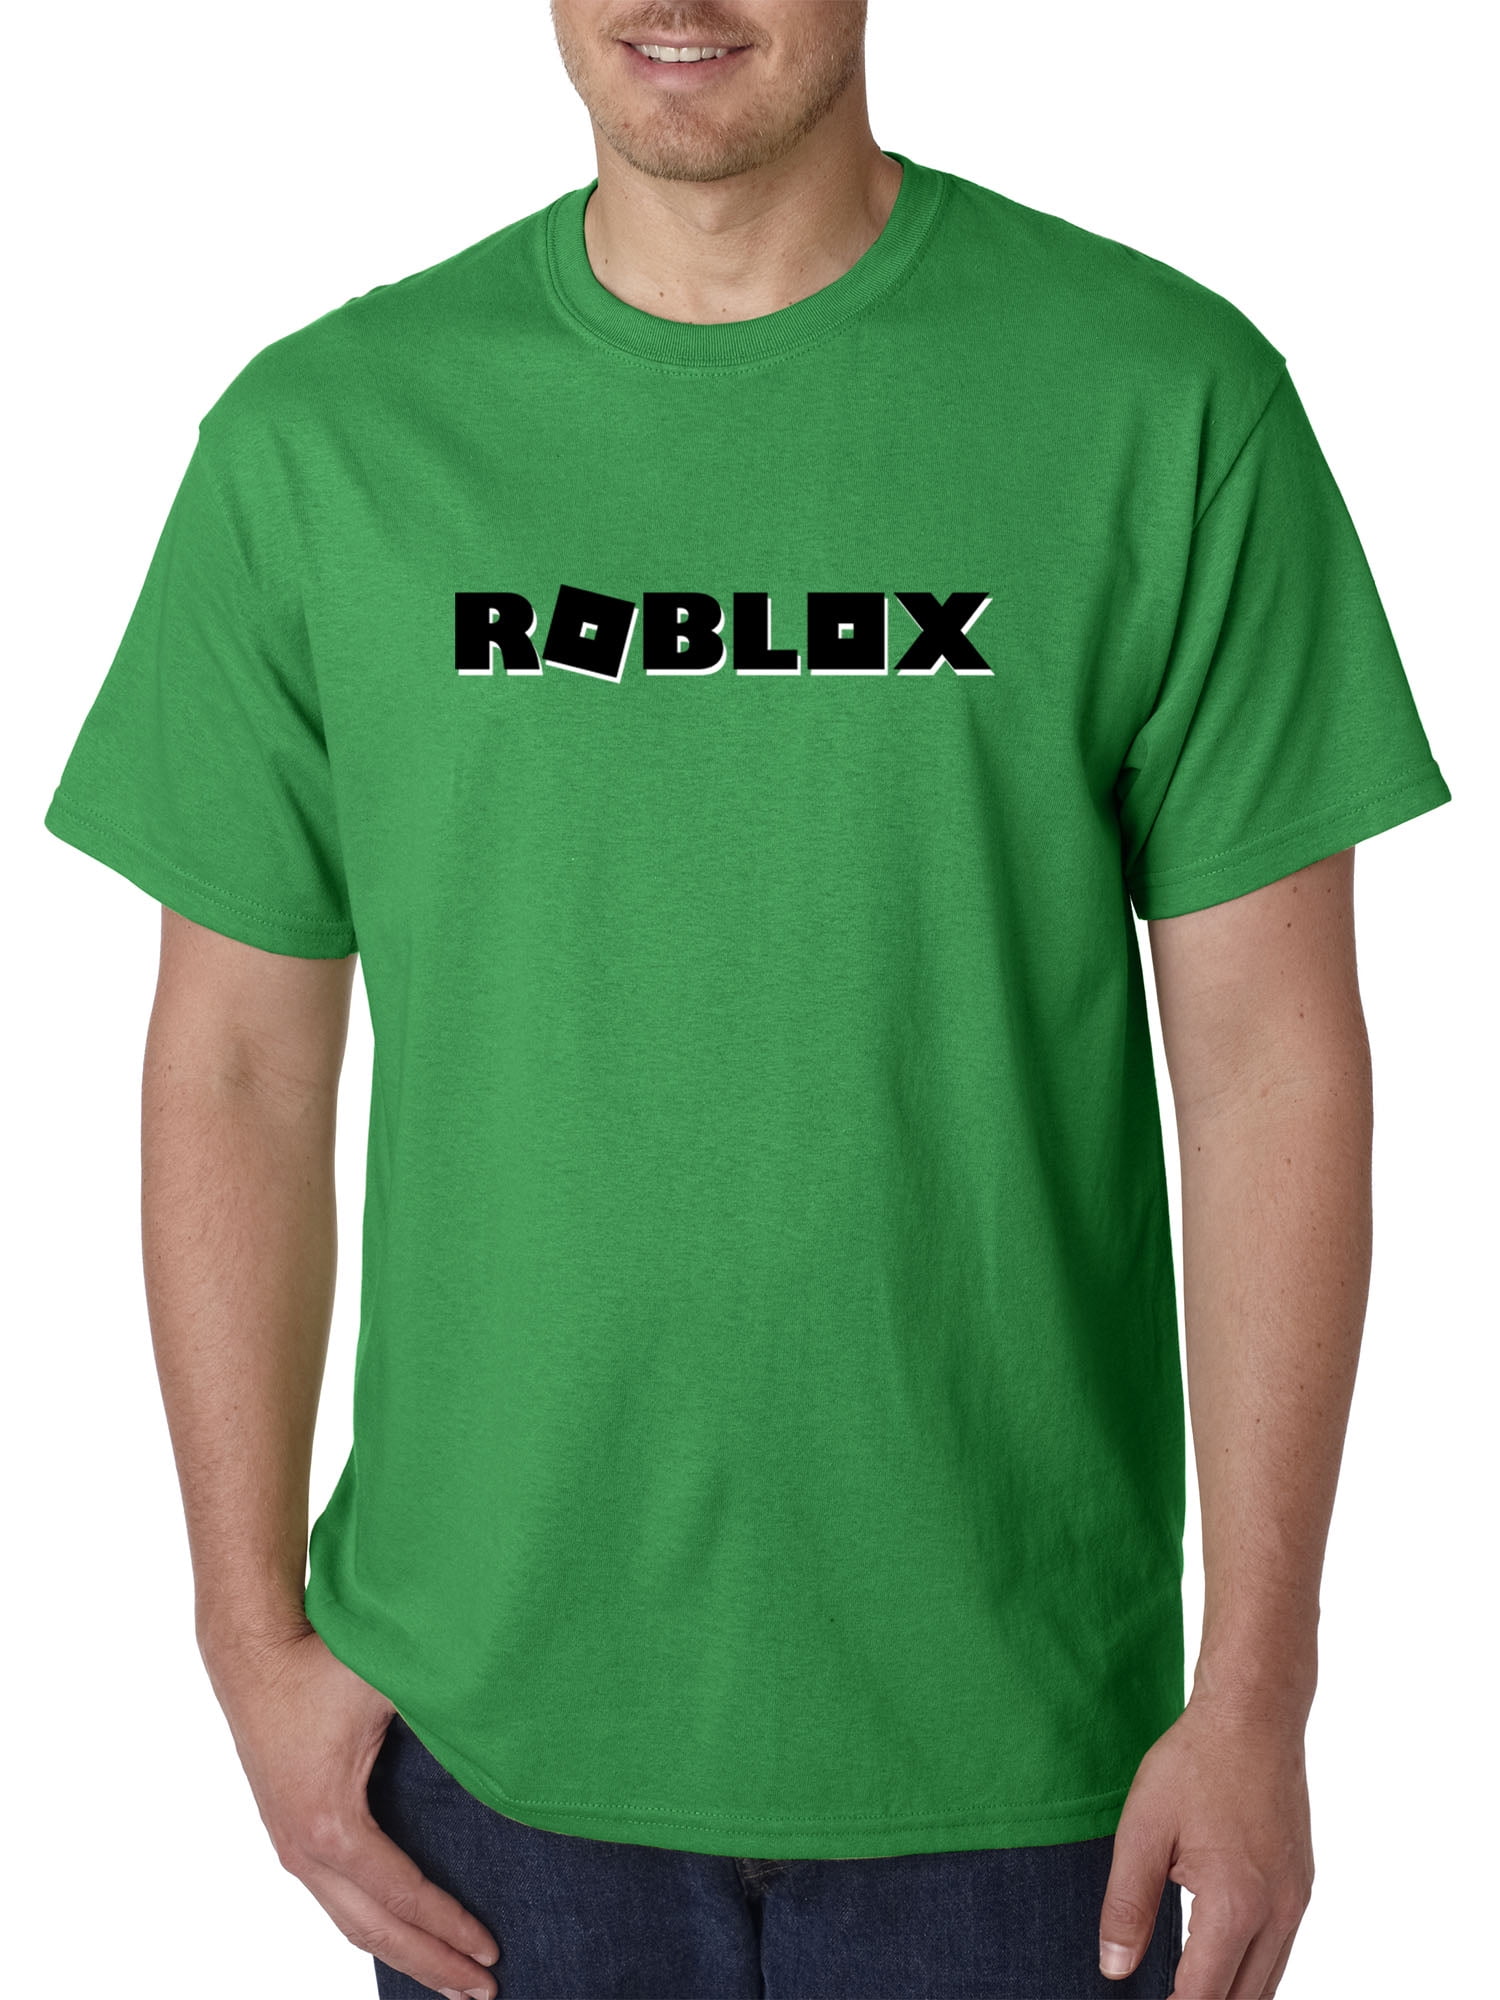 New Way New Way 1168 Unisex T Shirt Roblox Block Logo Game Accent Medium Kelly Green Walmart Com Walmart Com - green roblox t shirt